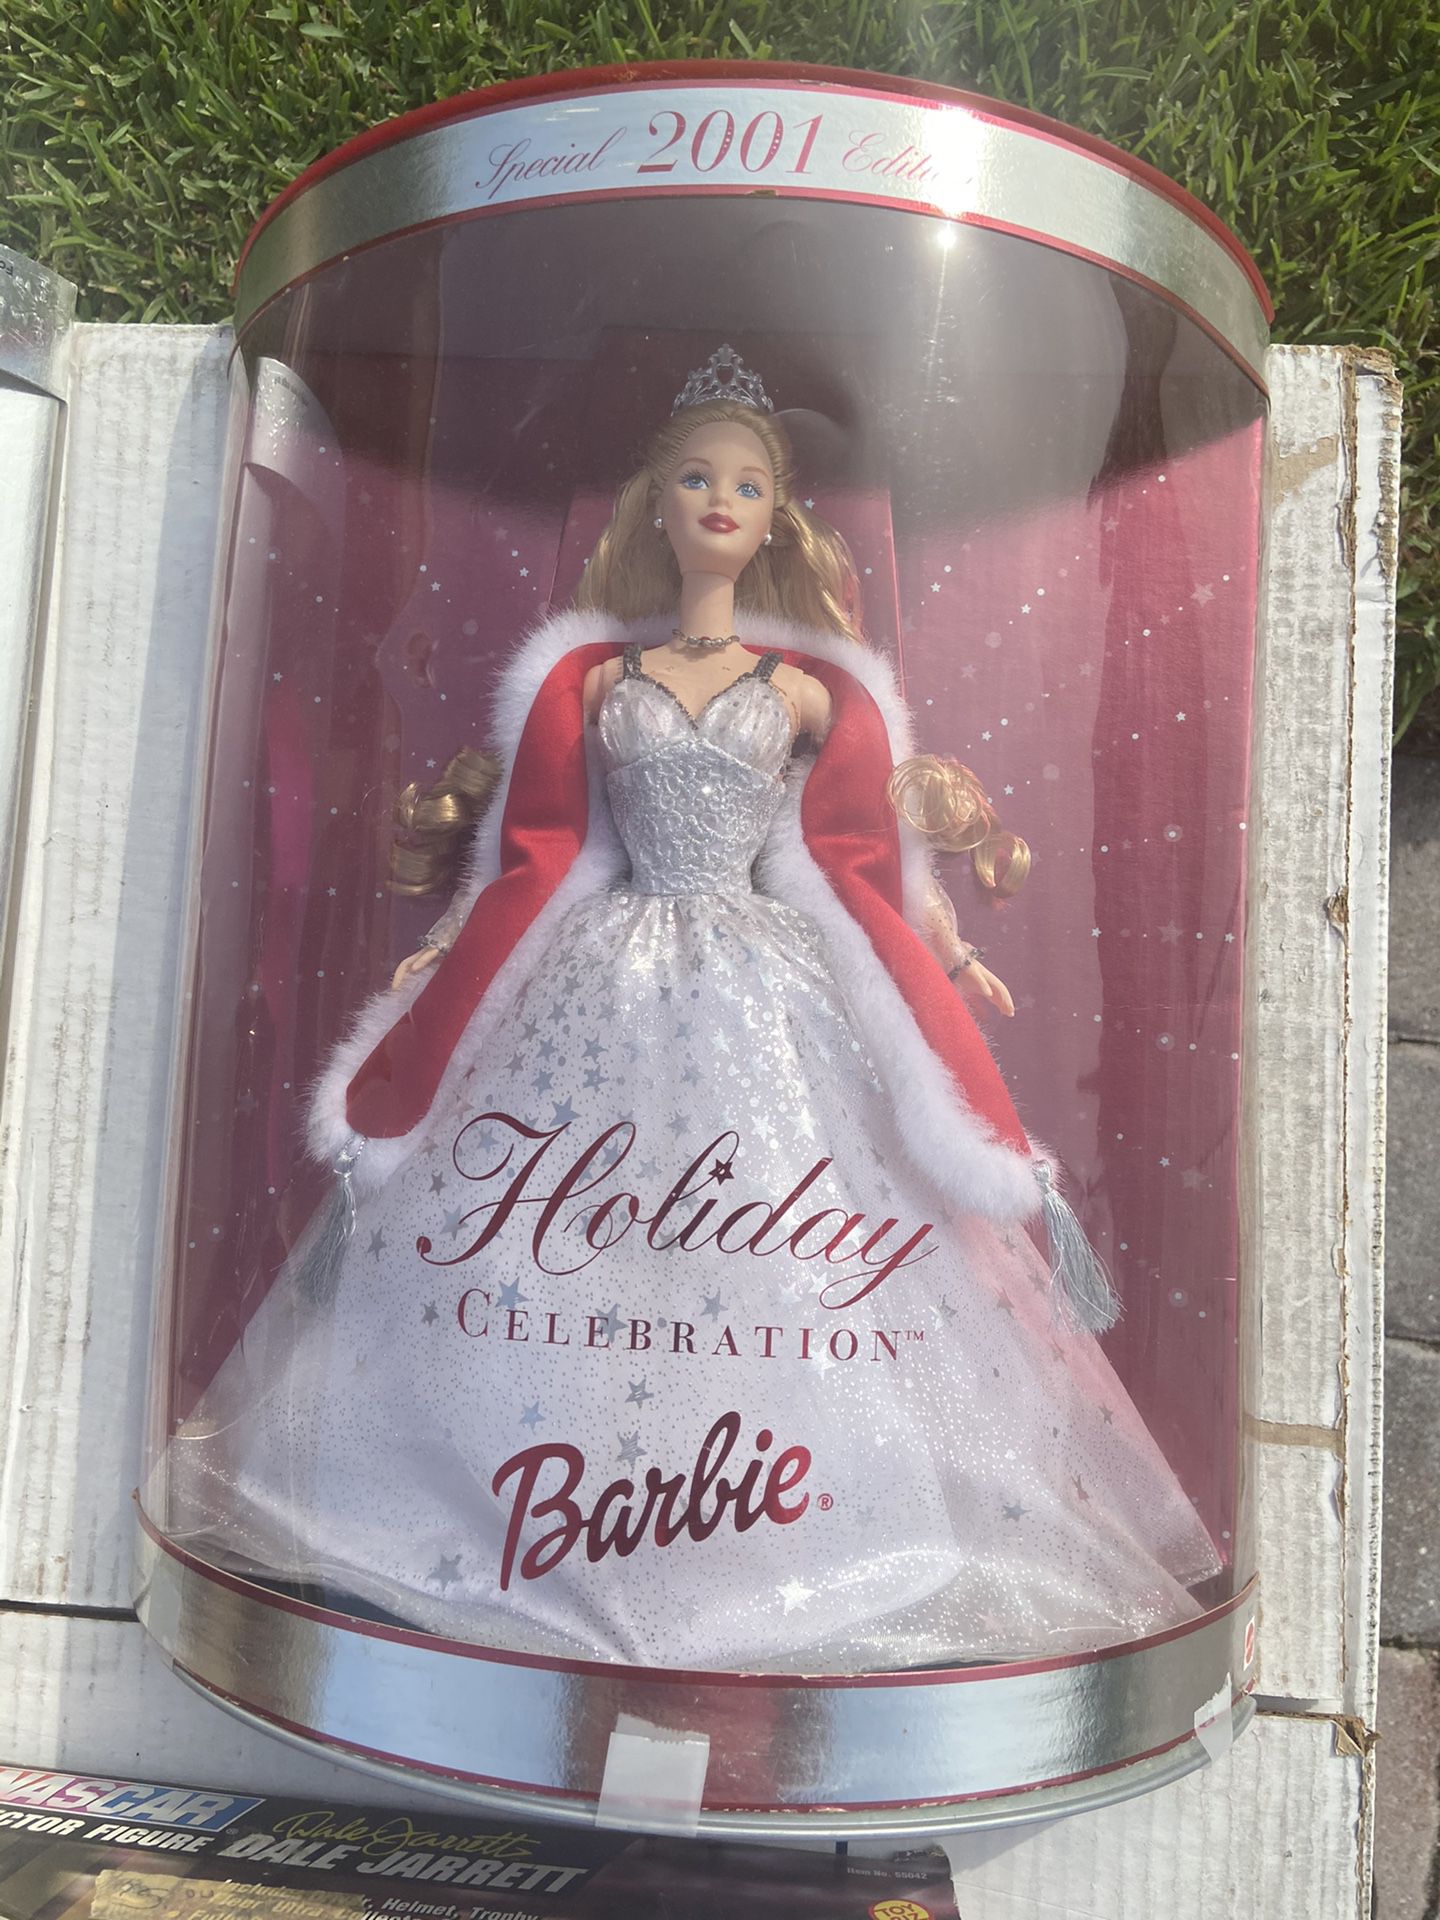 Barbie Holiday Celebration Special 2001 Edition